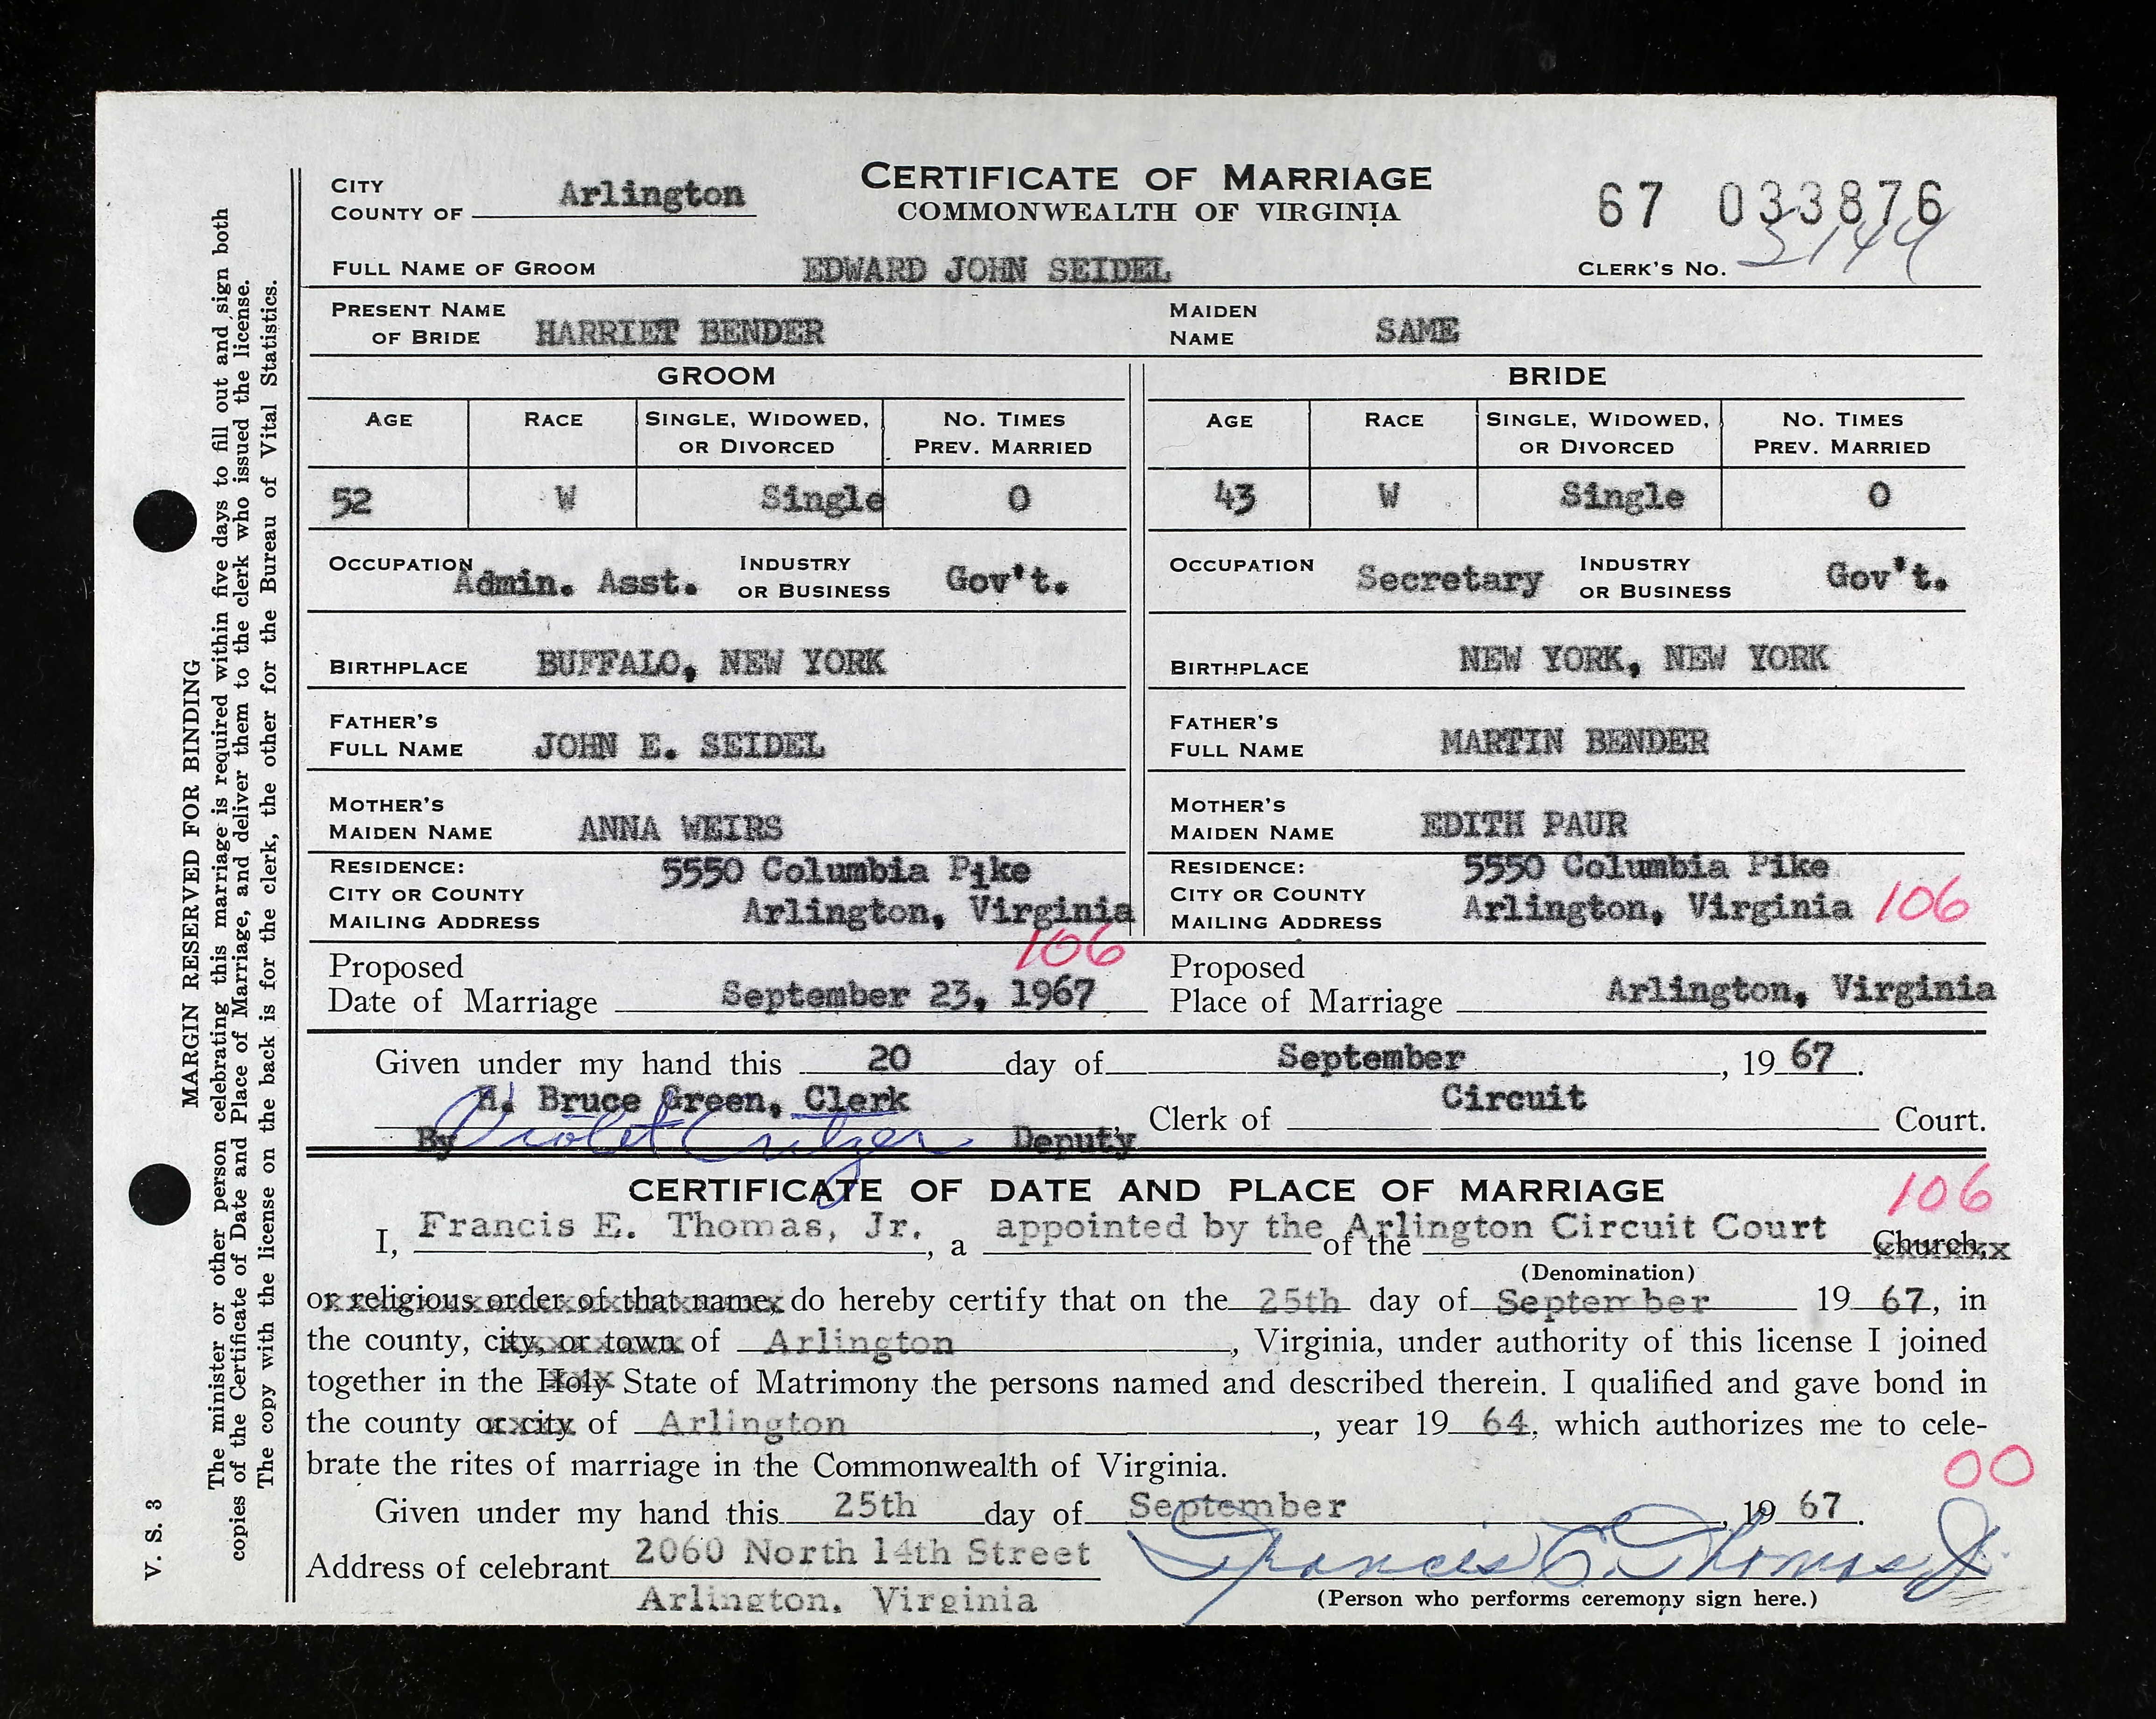 Certificate of Marriage, Edward John Seidel and Harriet Bender